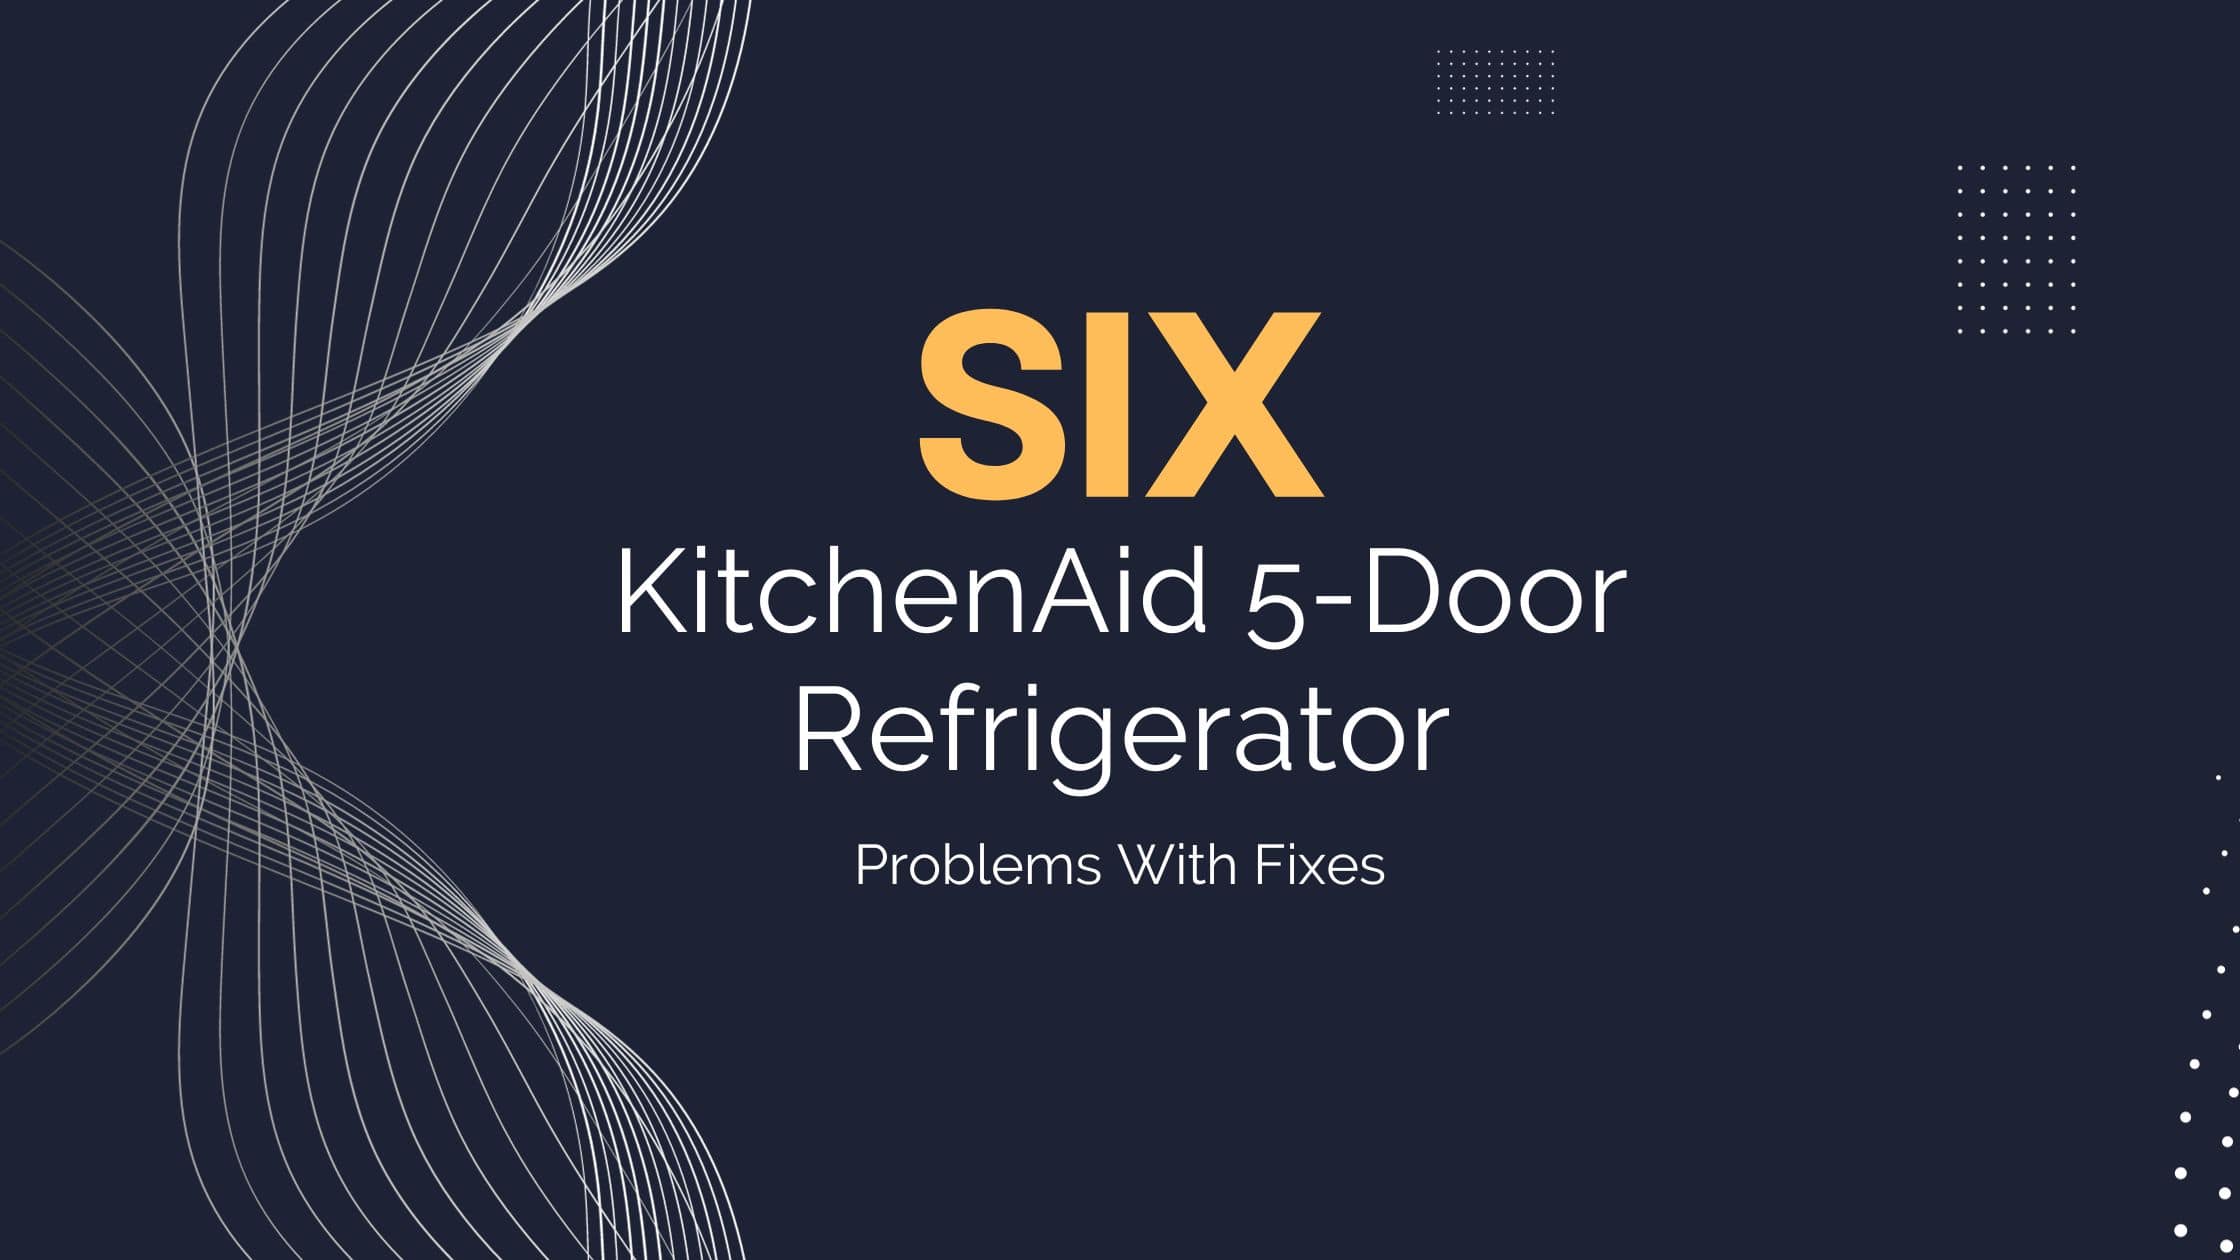 6 KitchenAid 5-Door Refrigerator Problems With Fixes